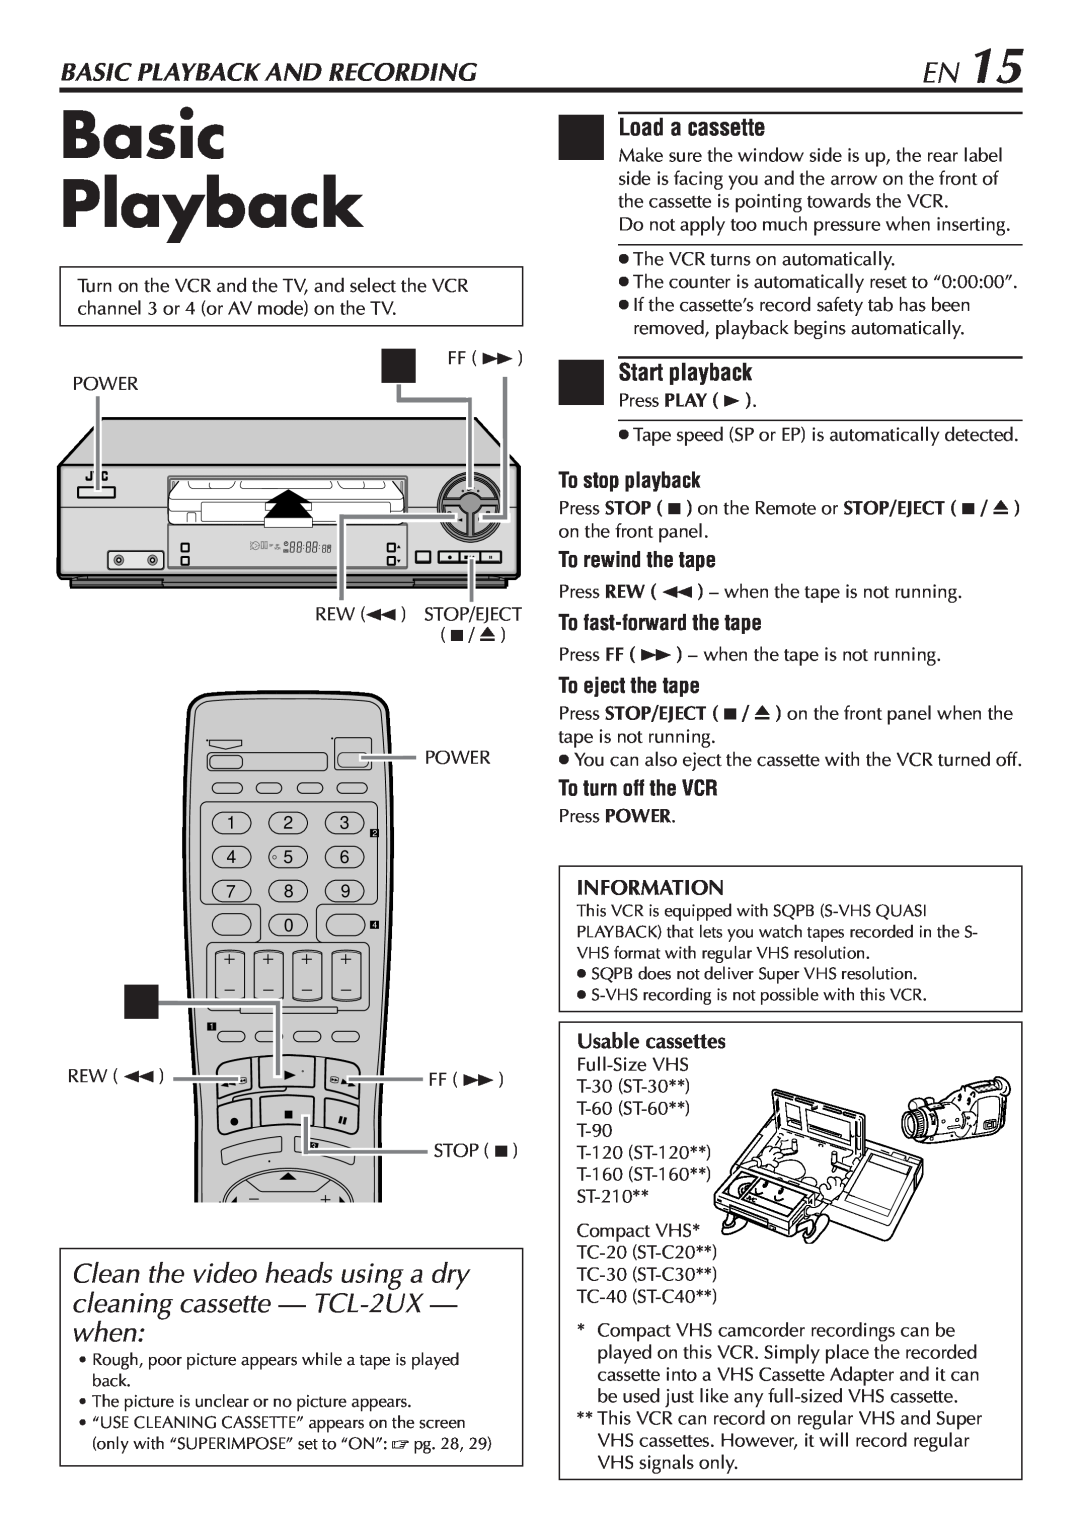 JVC HR-A47U manual Basic Playback And Recording, Load a cassette, 2Start playback 